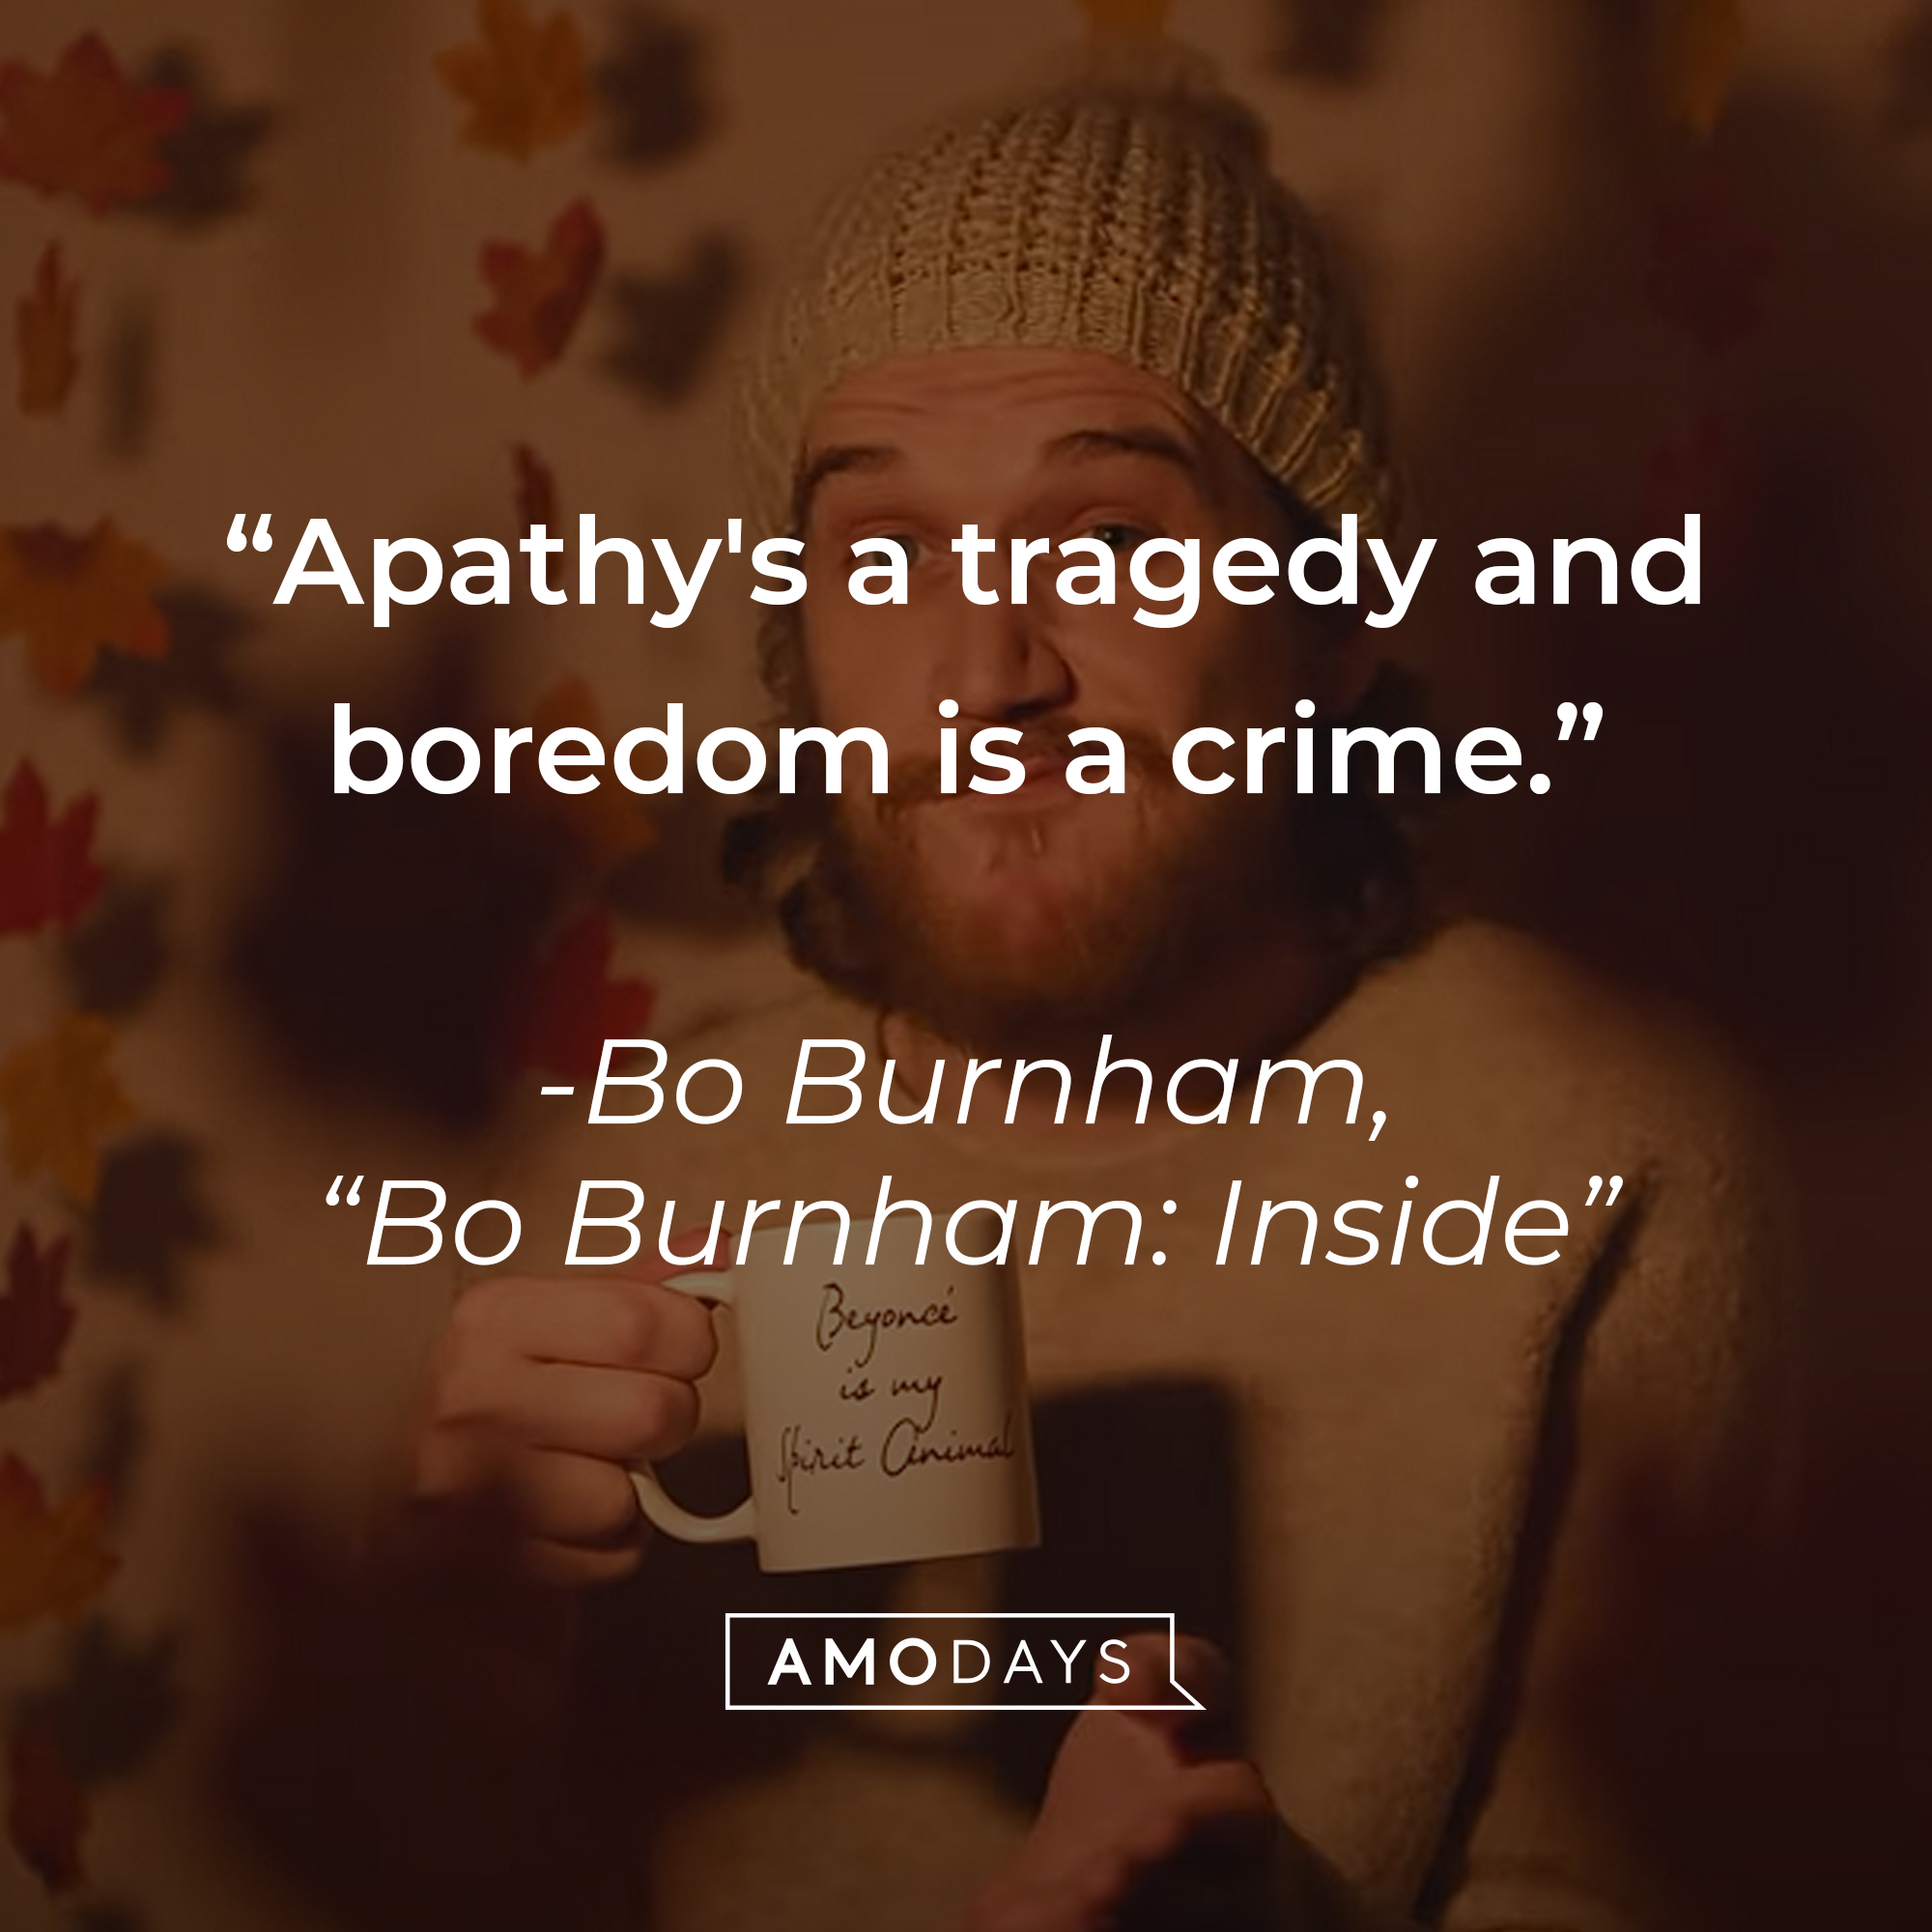 A quote from Bo Burnham in "Bo Burnham: Inside" comedy special: "Apathy's a tragedy and boredom is a crime." | Source: youtube.com/boburnham